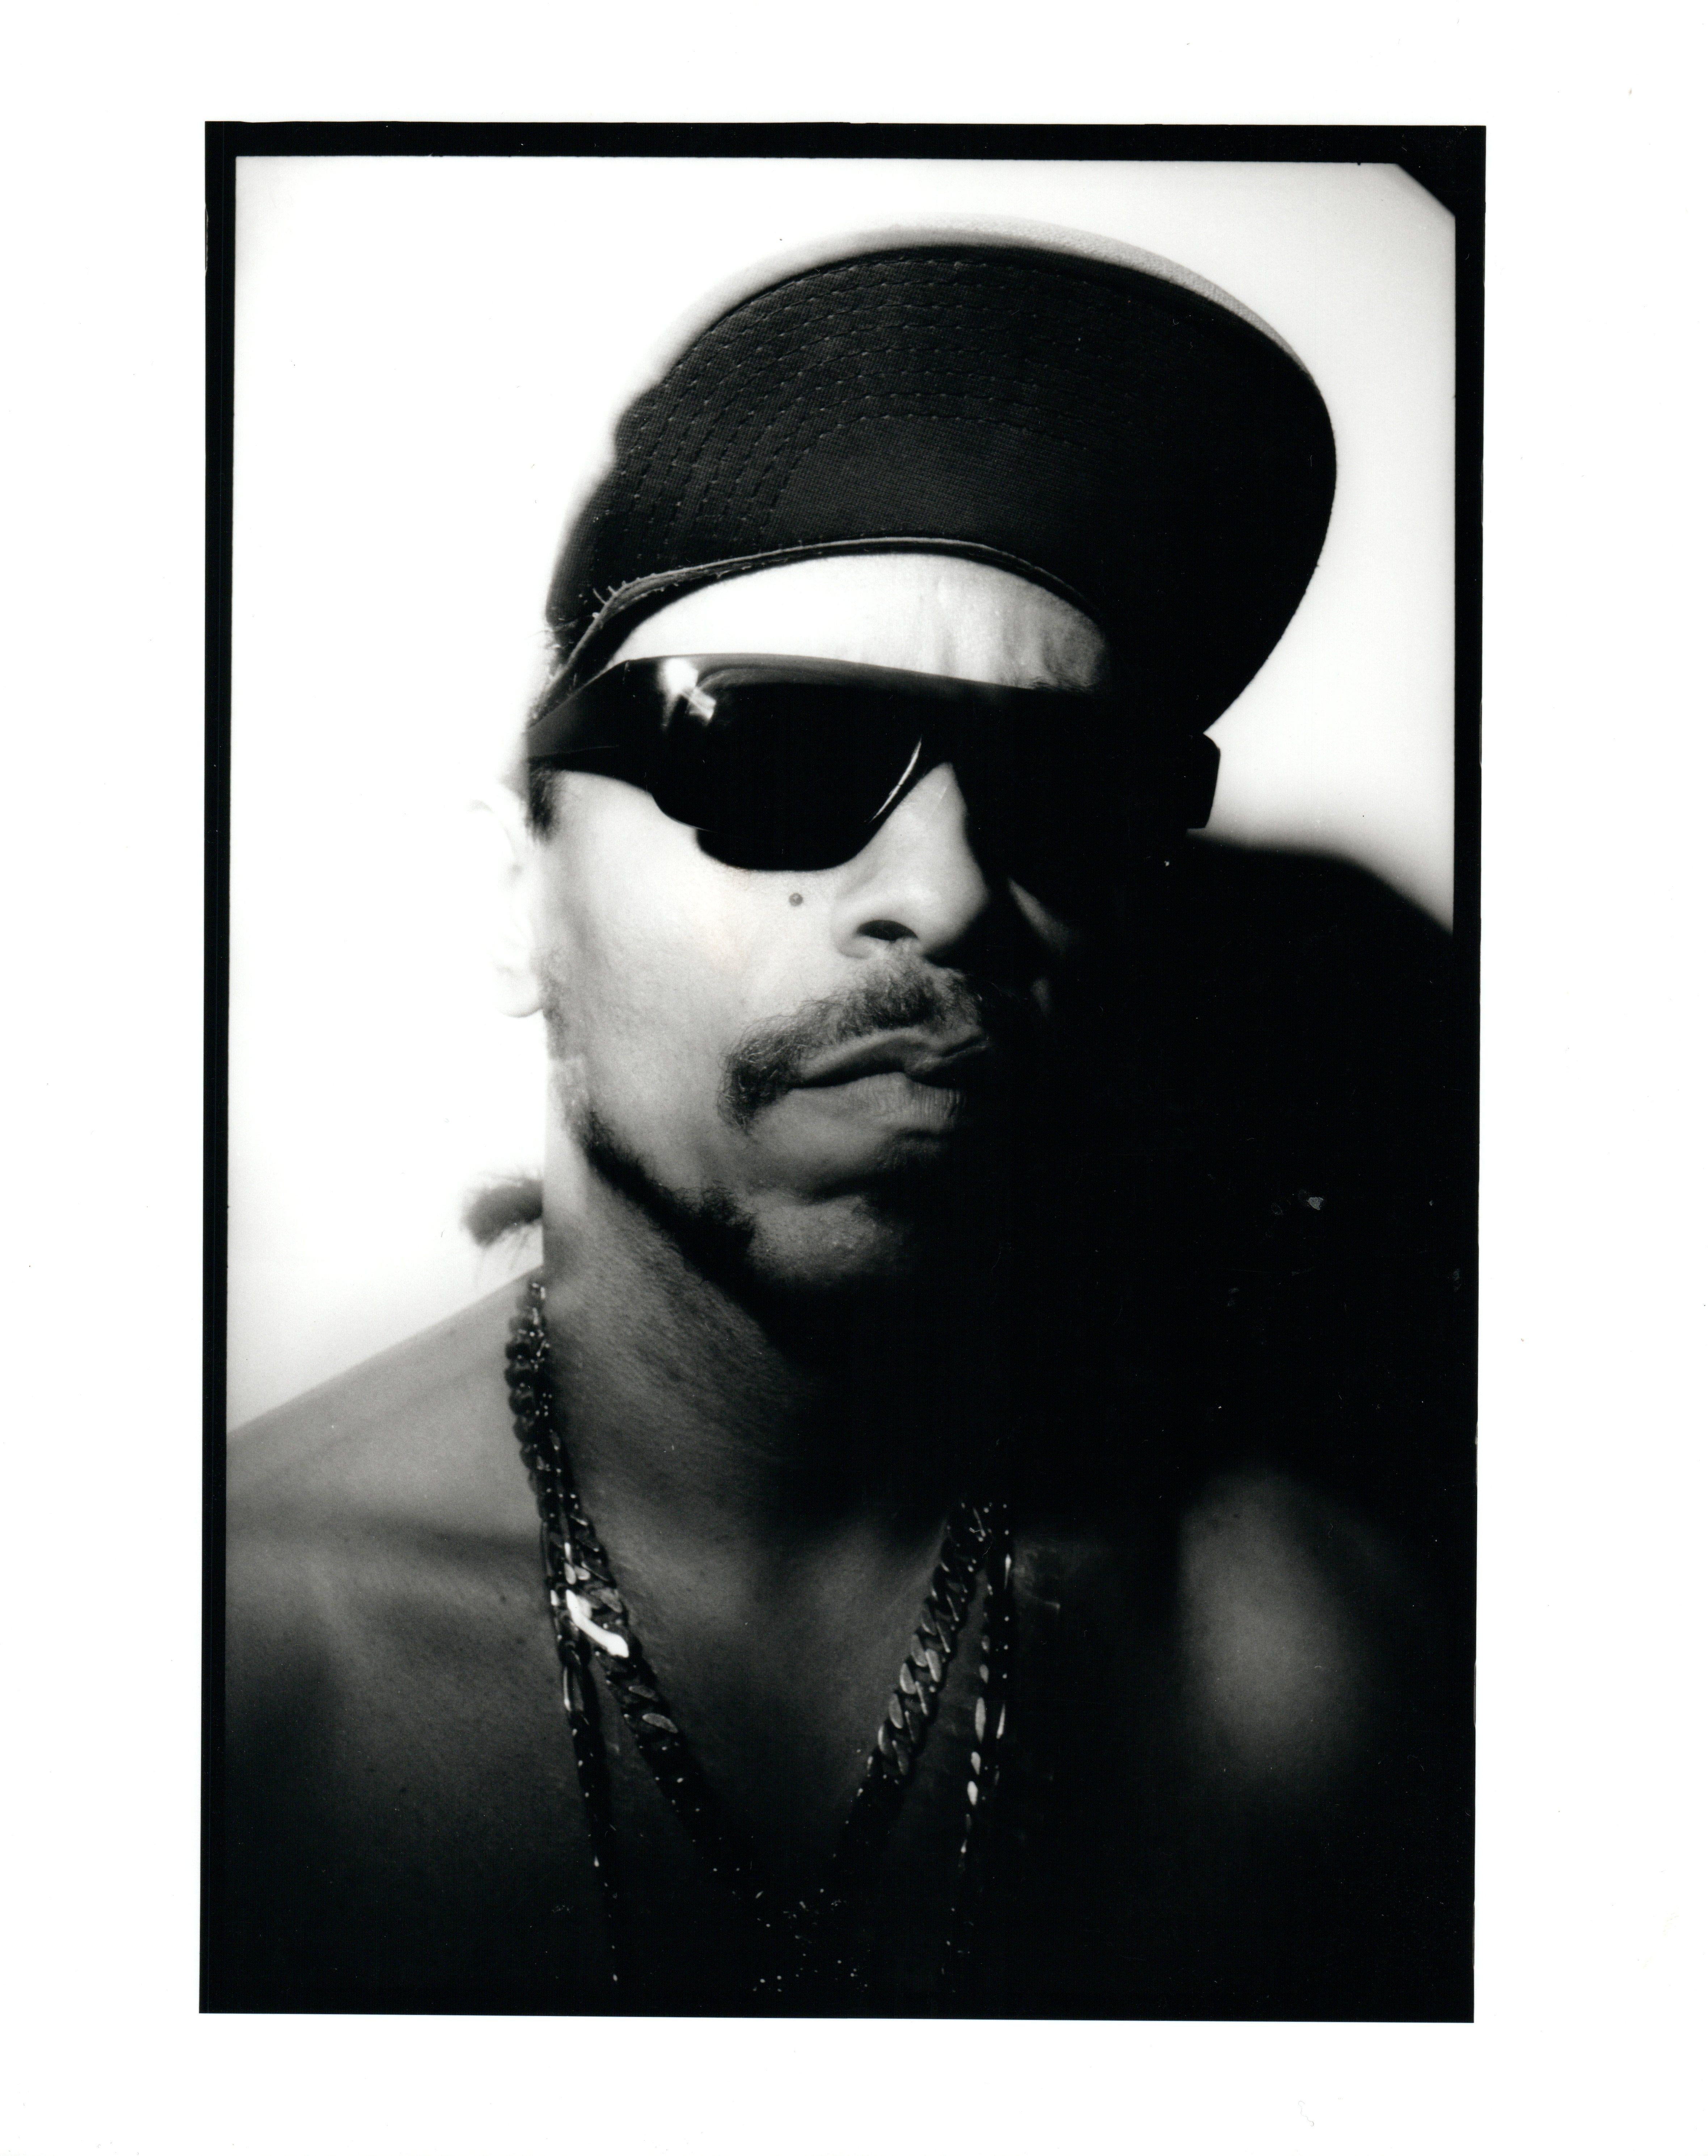 Unknown Portrait Photograph - Ice T in Sunglasses Vintage Original Photograph